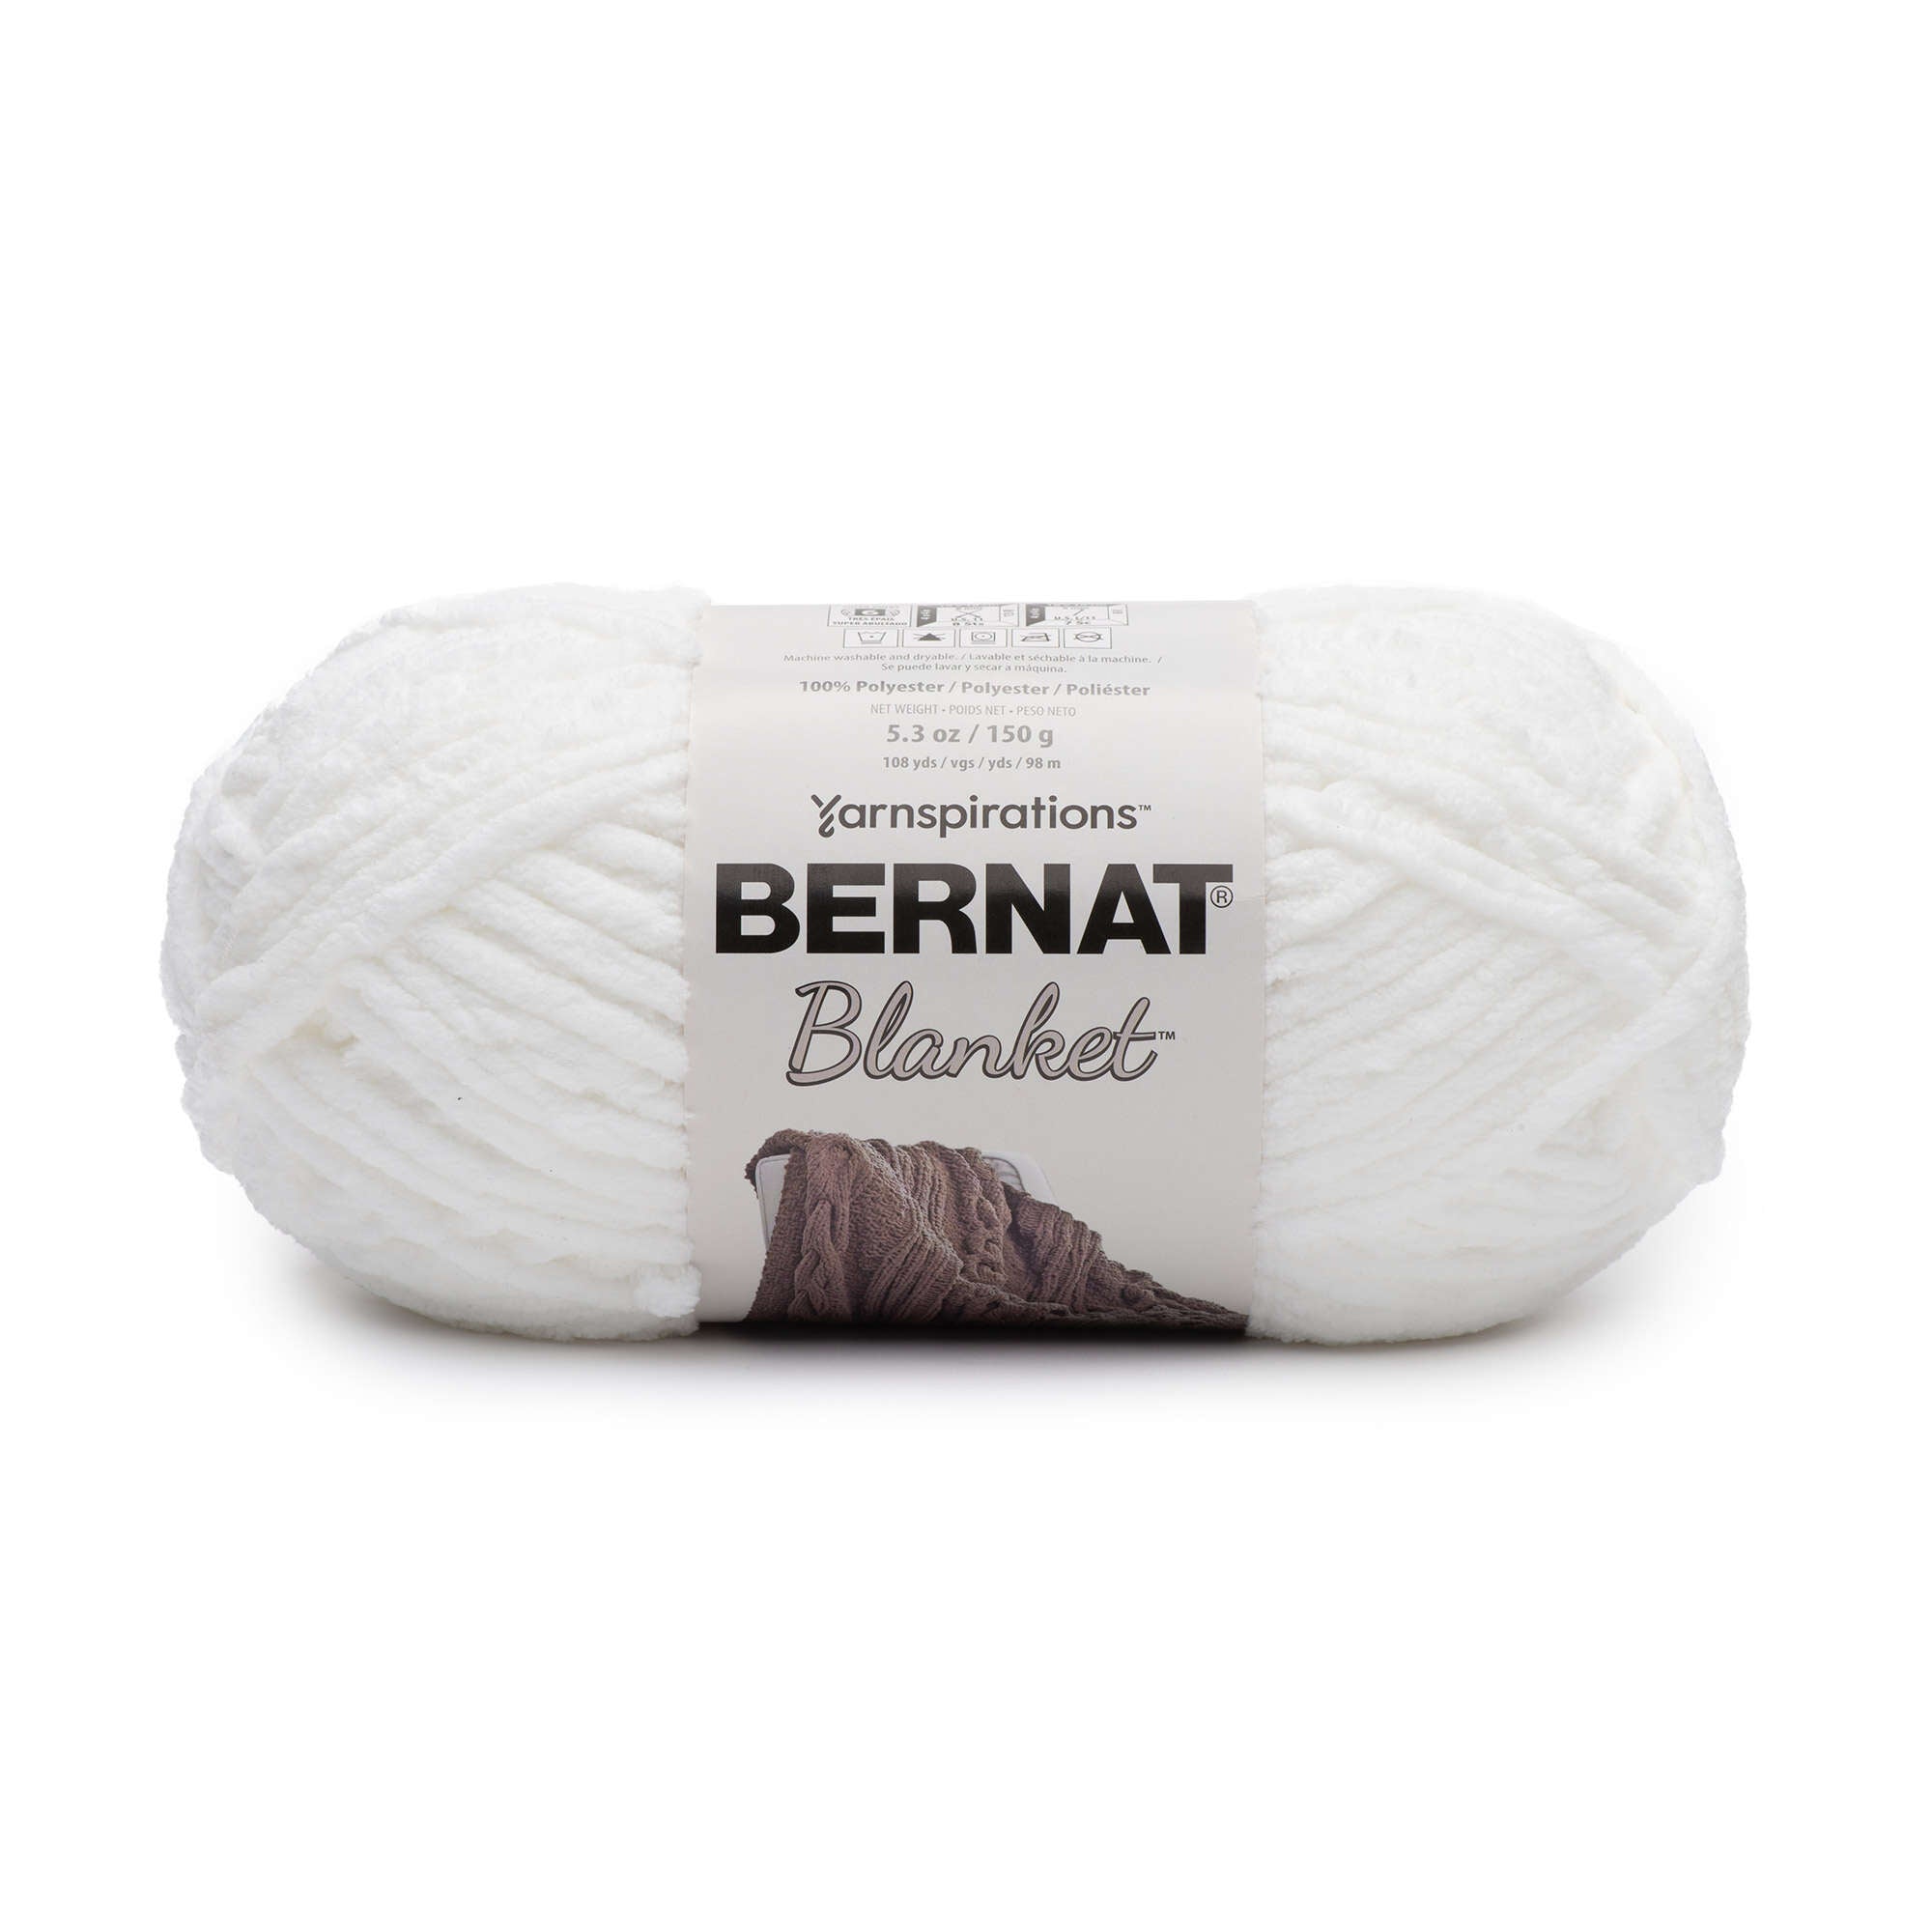 Bernat Blanket Dark Teal Yarn - 3 Pack Of 150g/5.3oz - Polyester